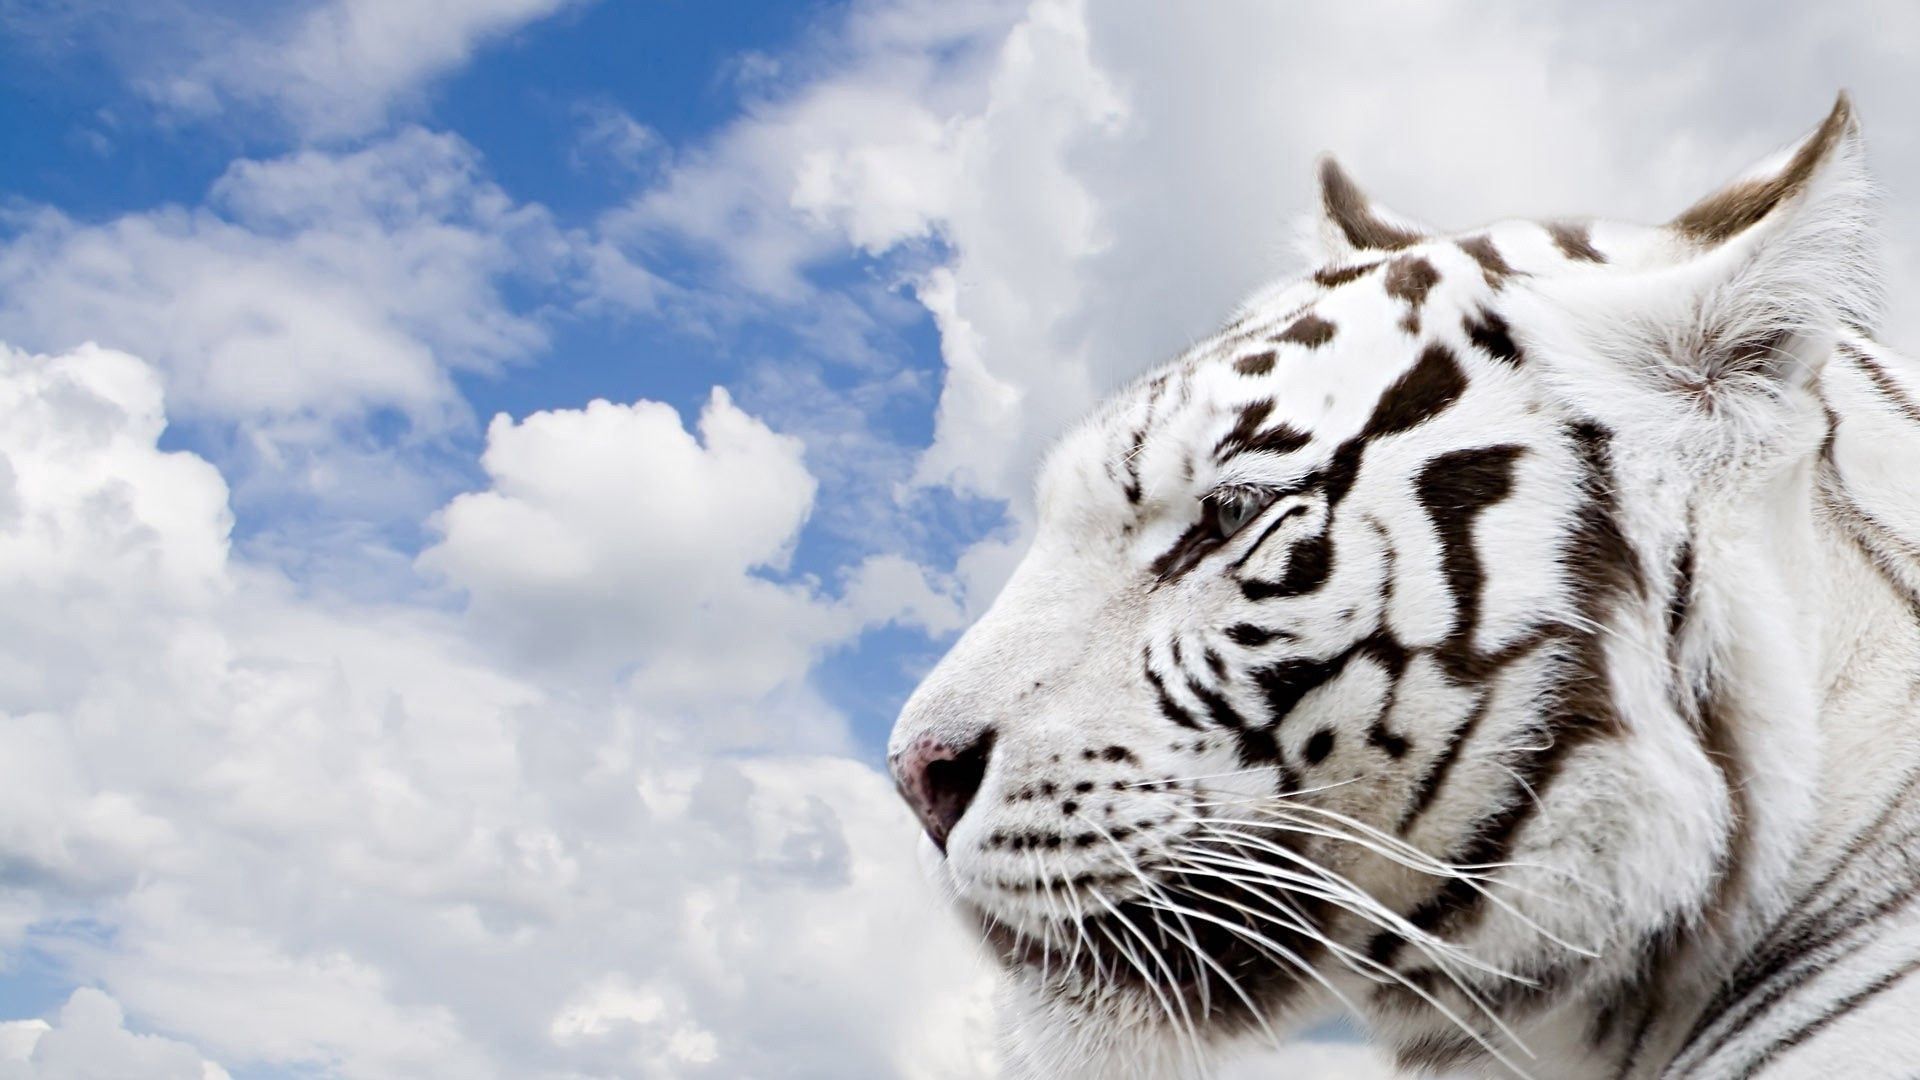 Descarga gratuita de fondo de pantalla para móvil de Animales, Nubes, Depredador, Cielo, Bozal, Tigre.